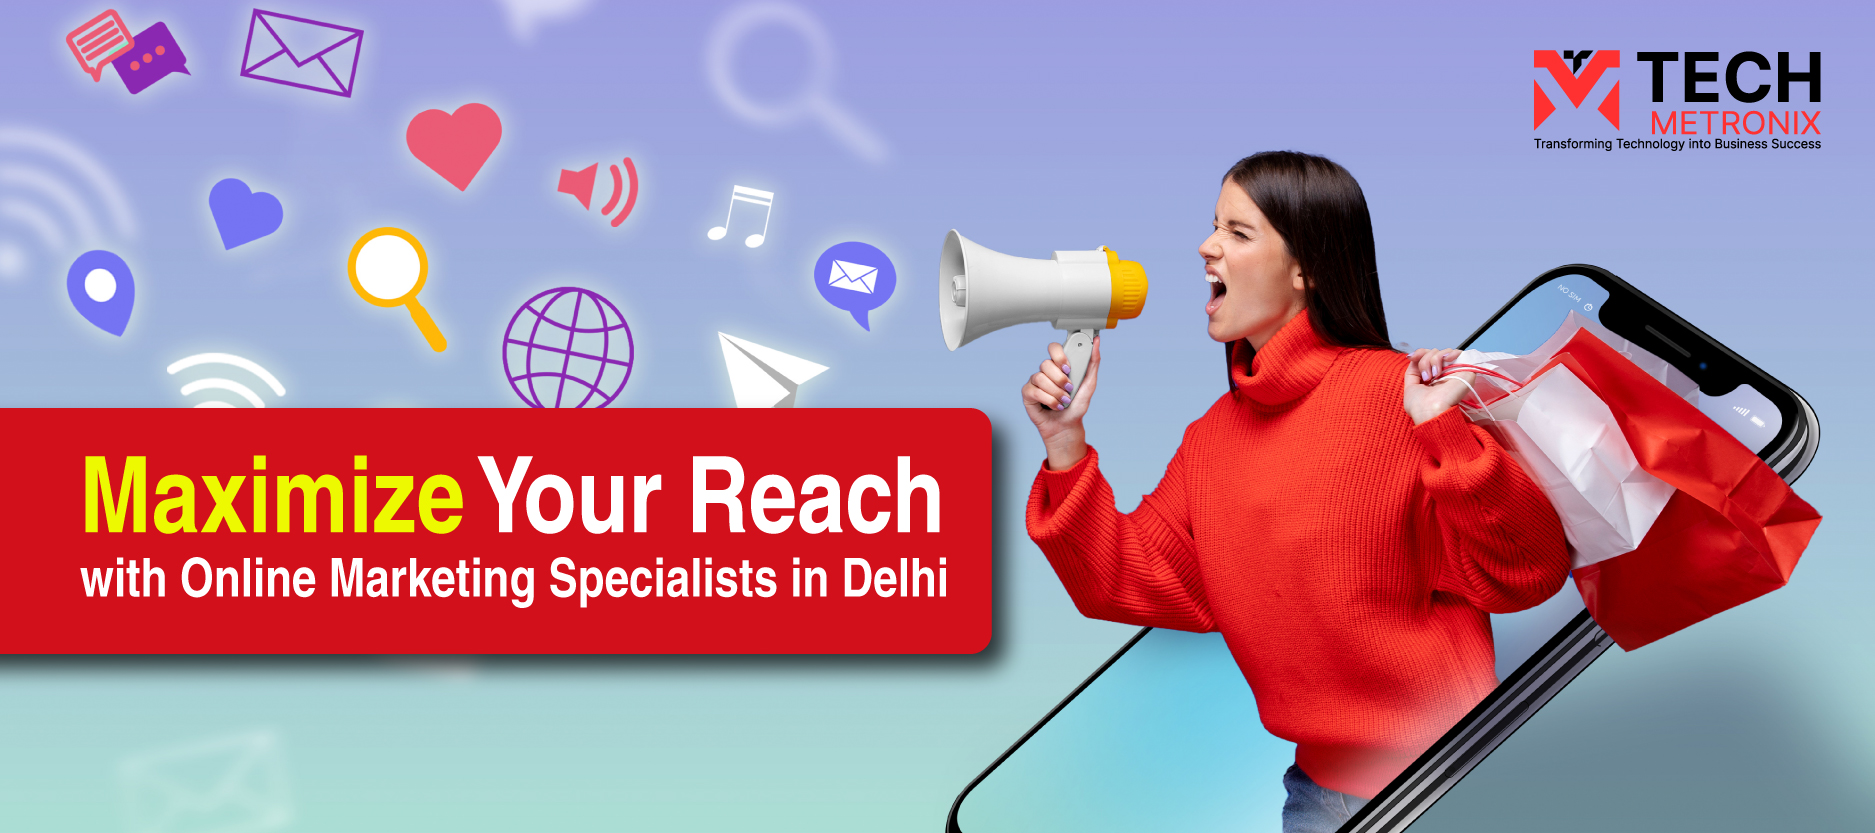 Online Marketing Specialists in Delhi